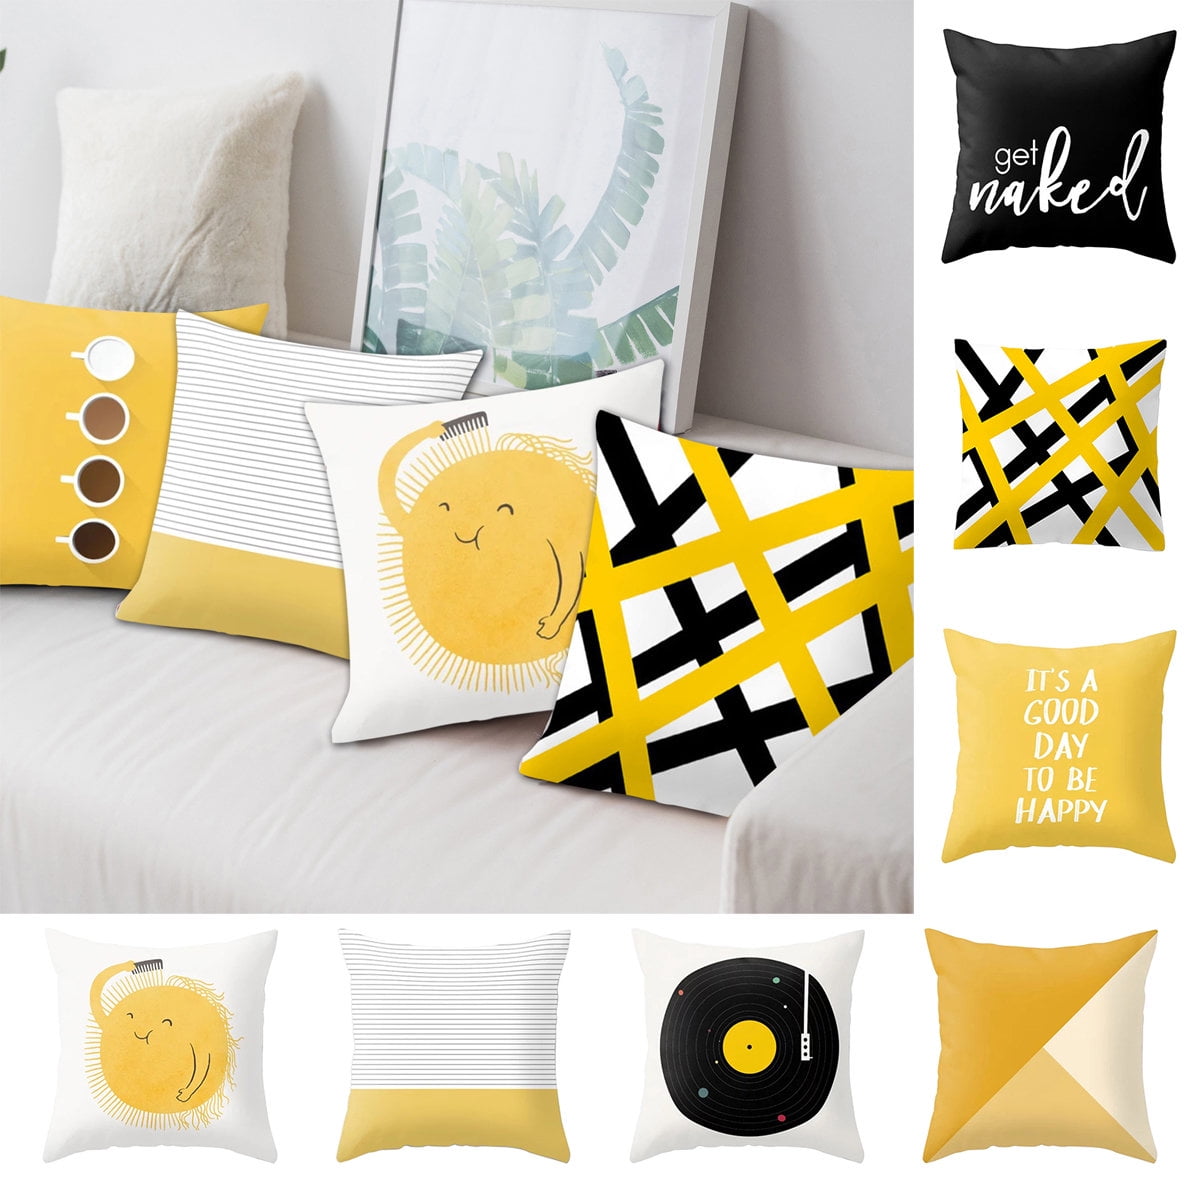 Set of 2 Velvet Cream Yellow Throw Pillow Covers Couch SofaPillowcases 18x18" 